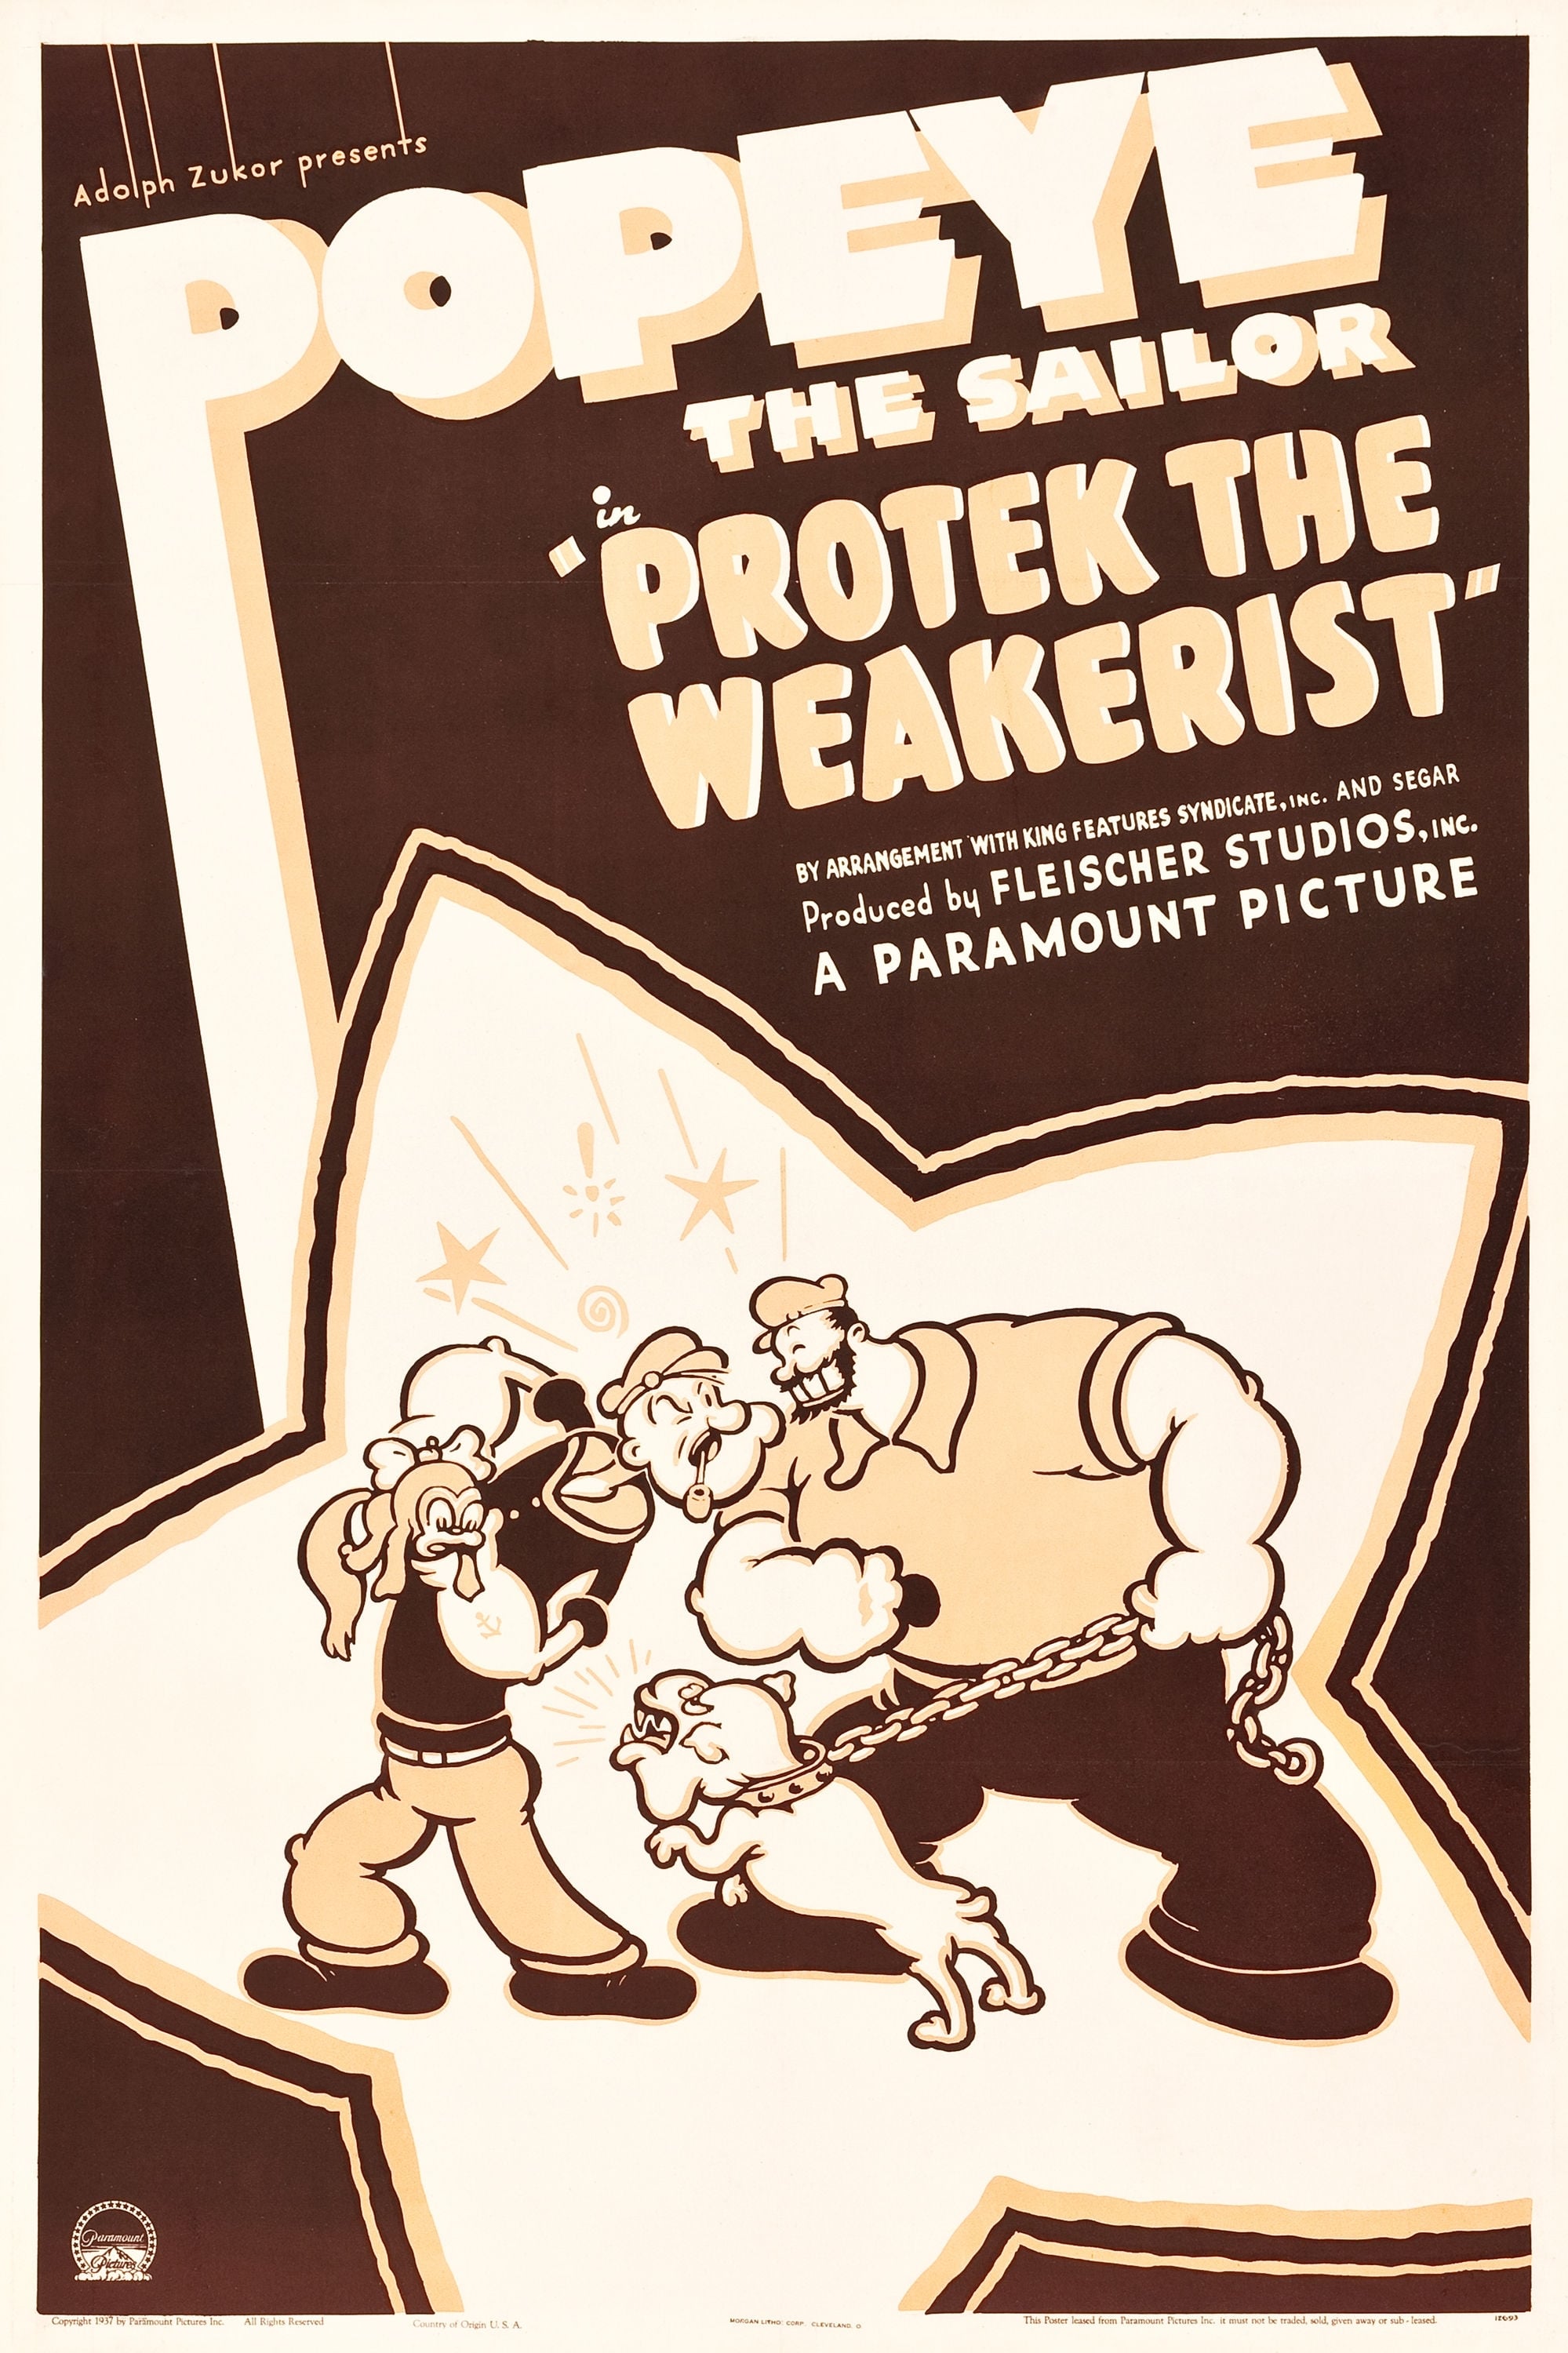 Protek the Weakerist